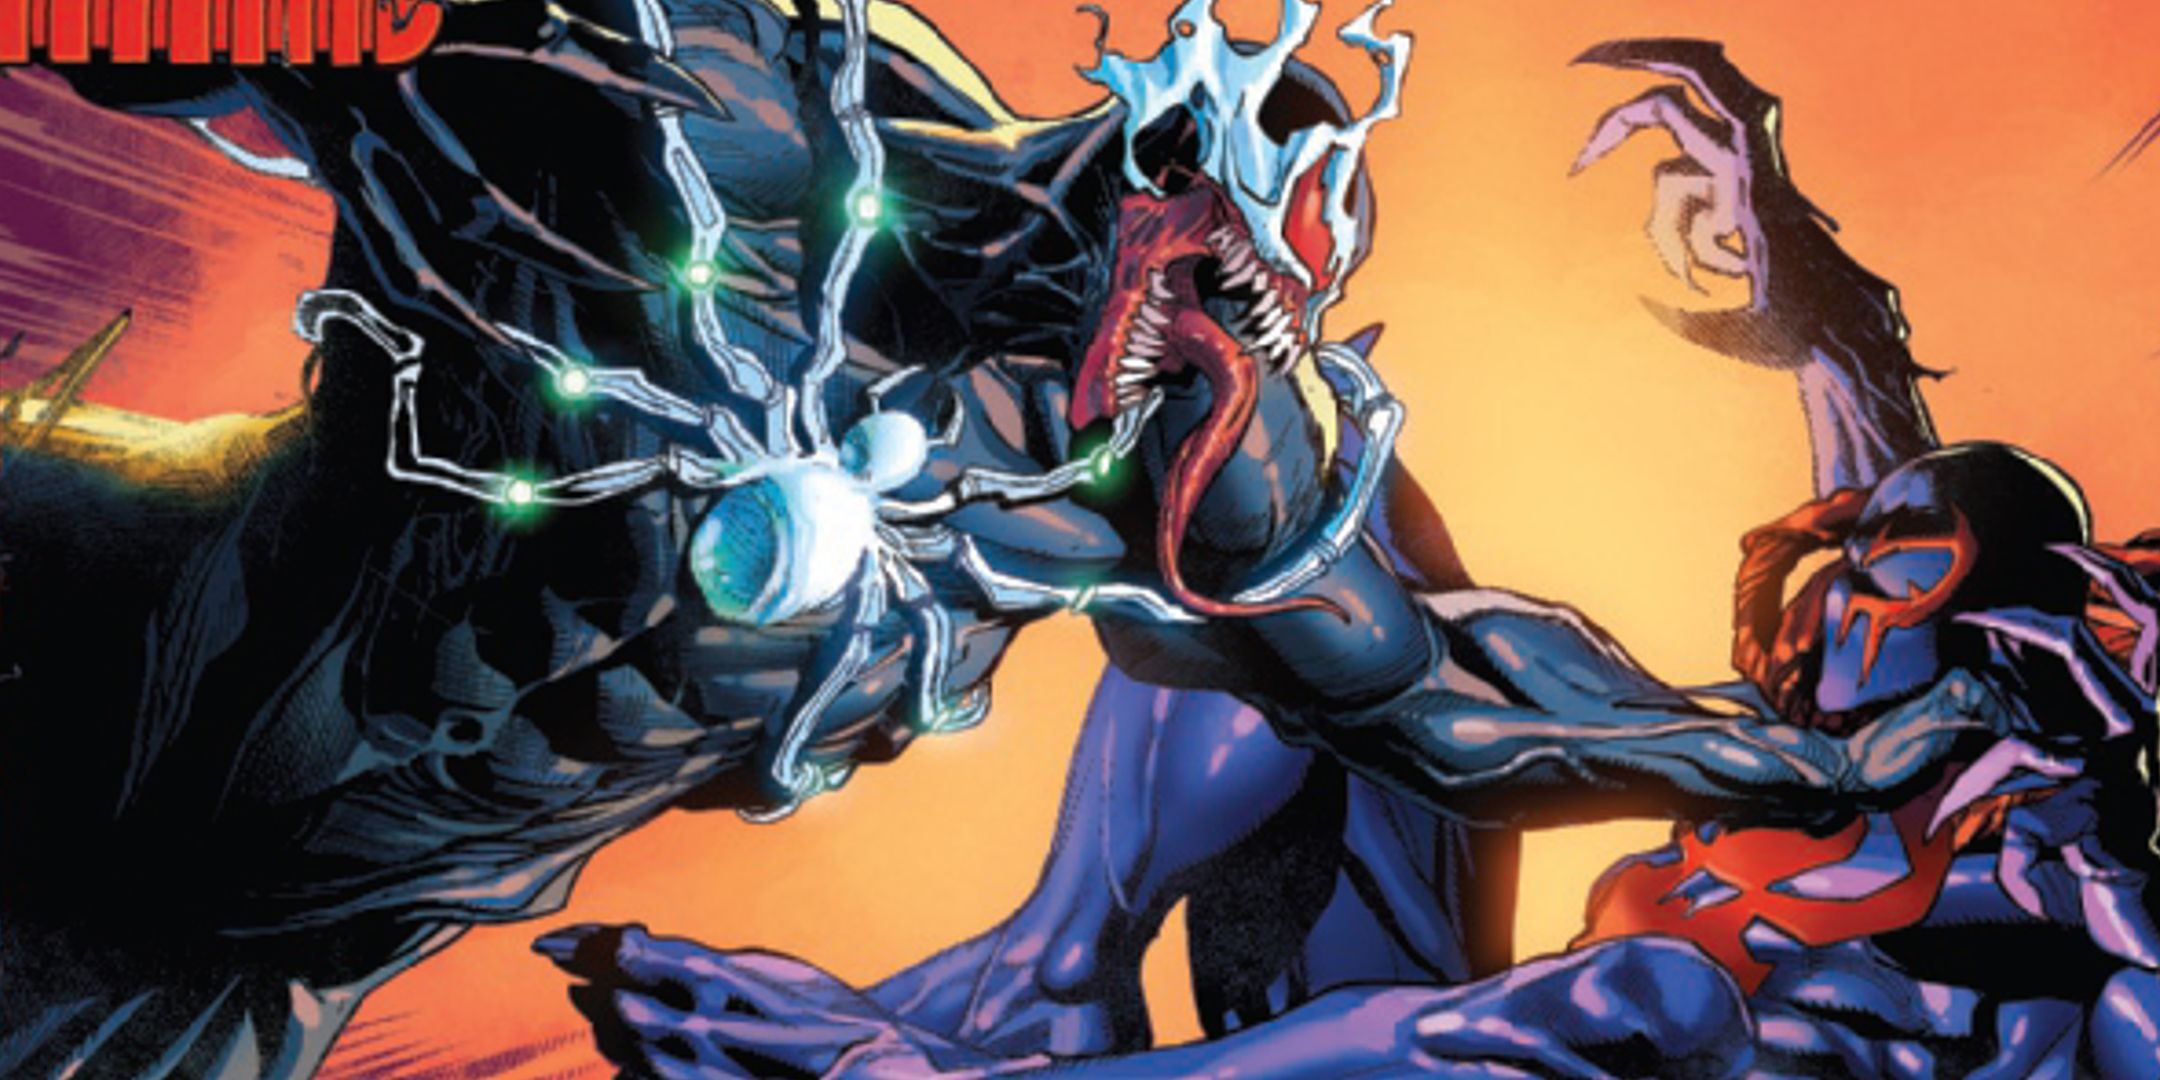 symbiote spider-man 2099 3 cover header